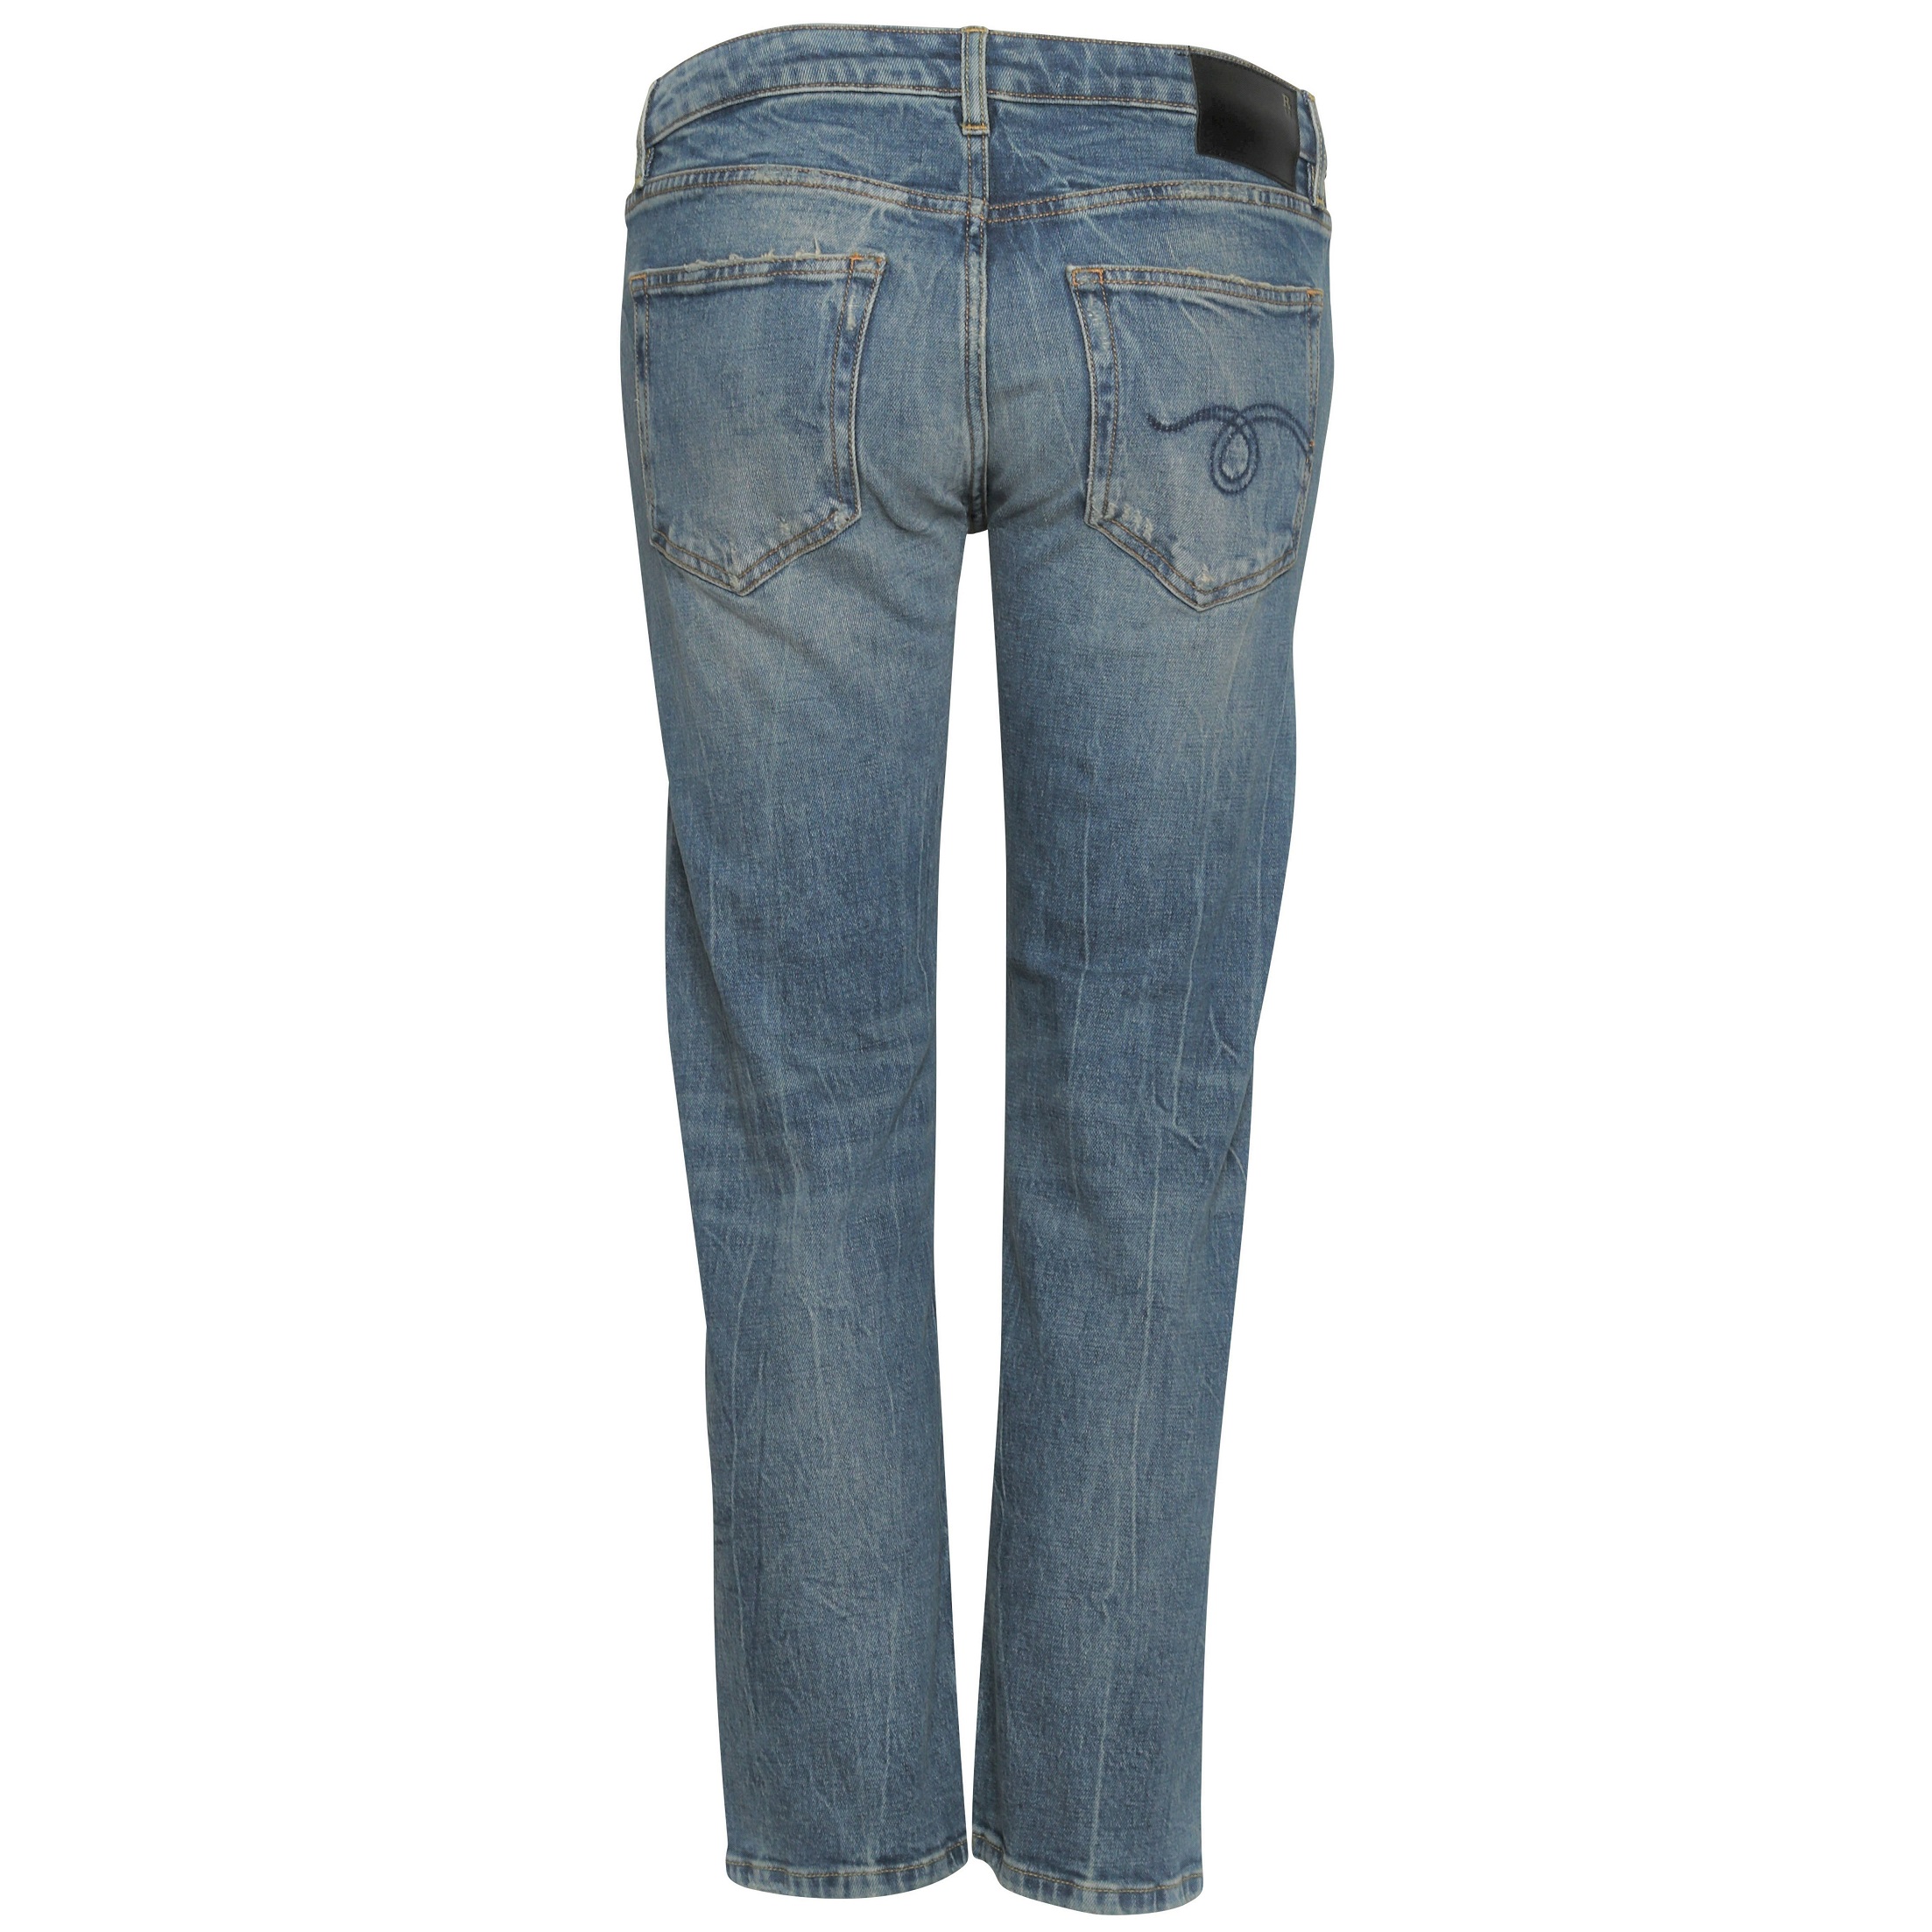 R13 Boy Straight Jeans in Kelly Wash 26